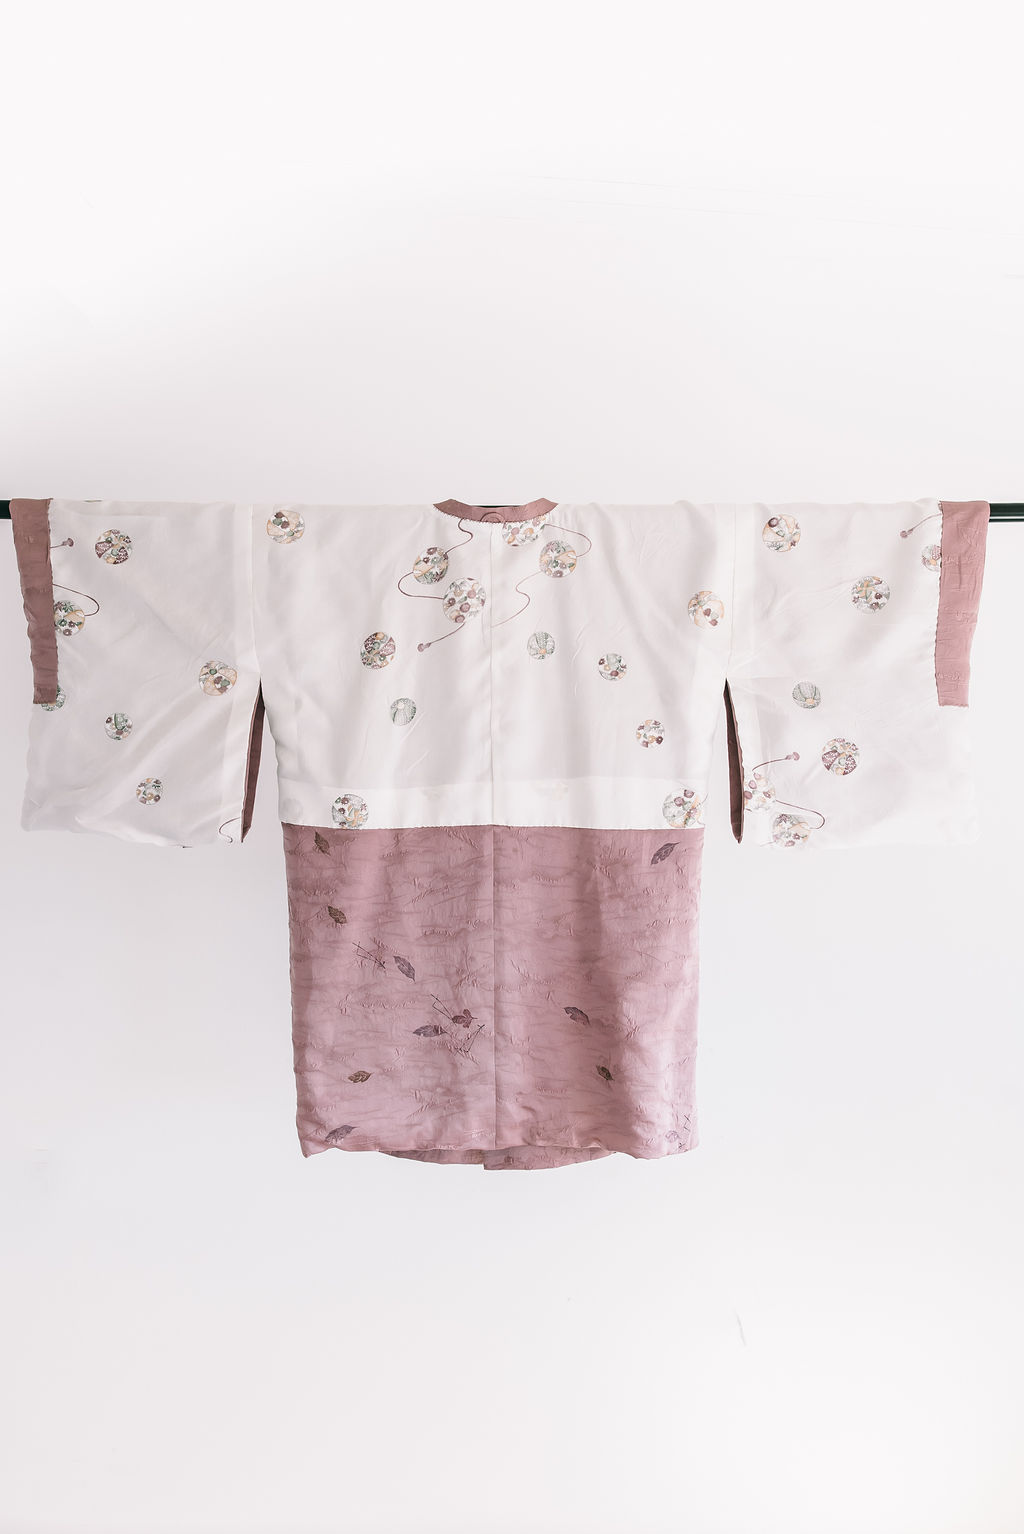 floral-vintage-kimono-pink